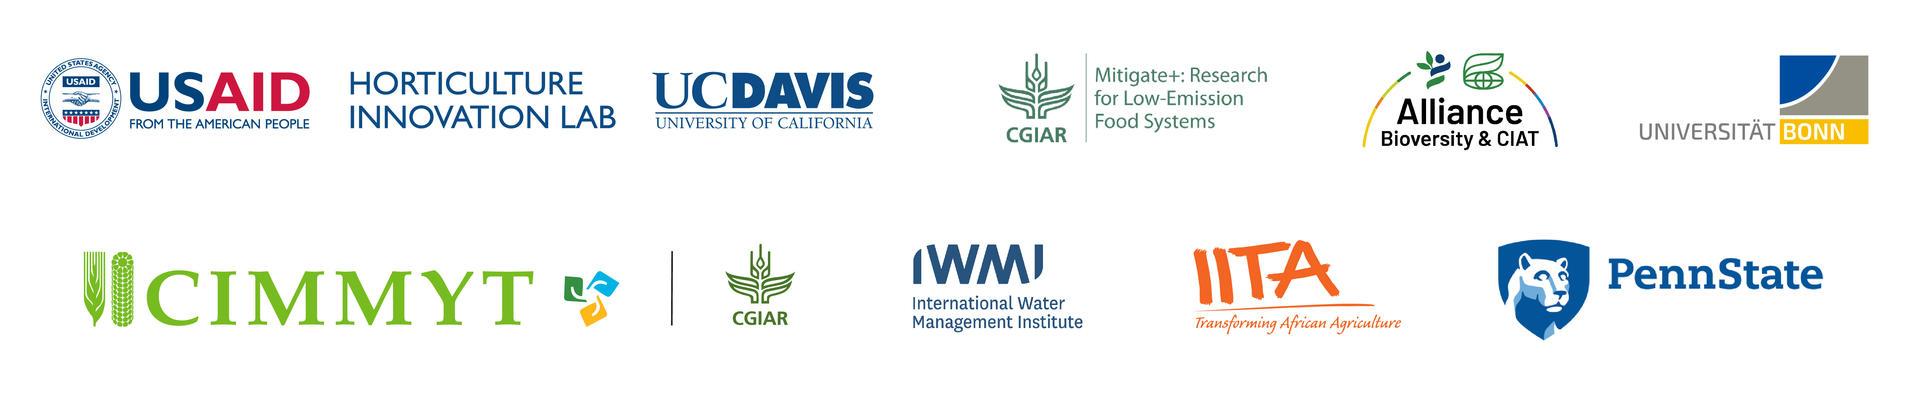 logos of participating partner organizations